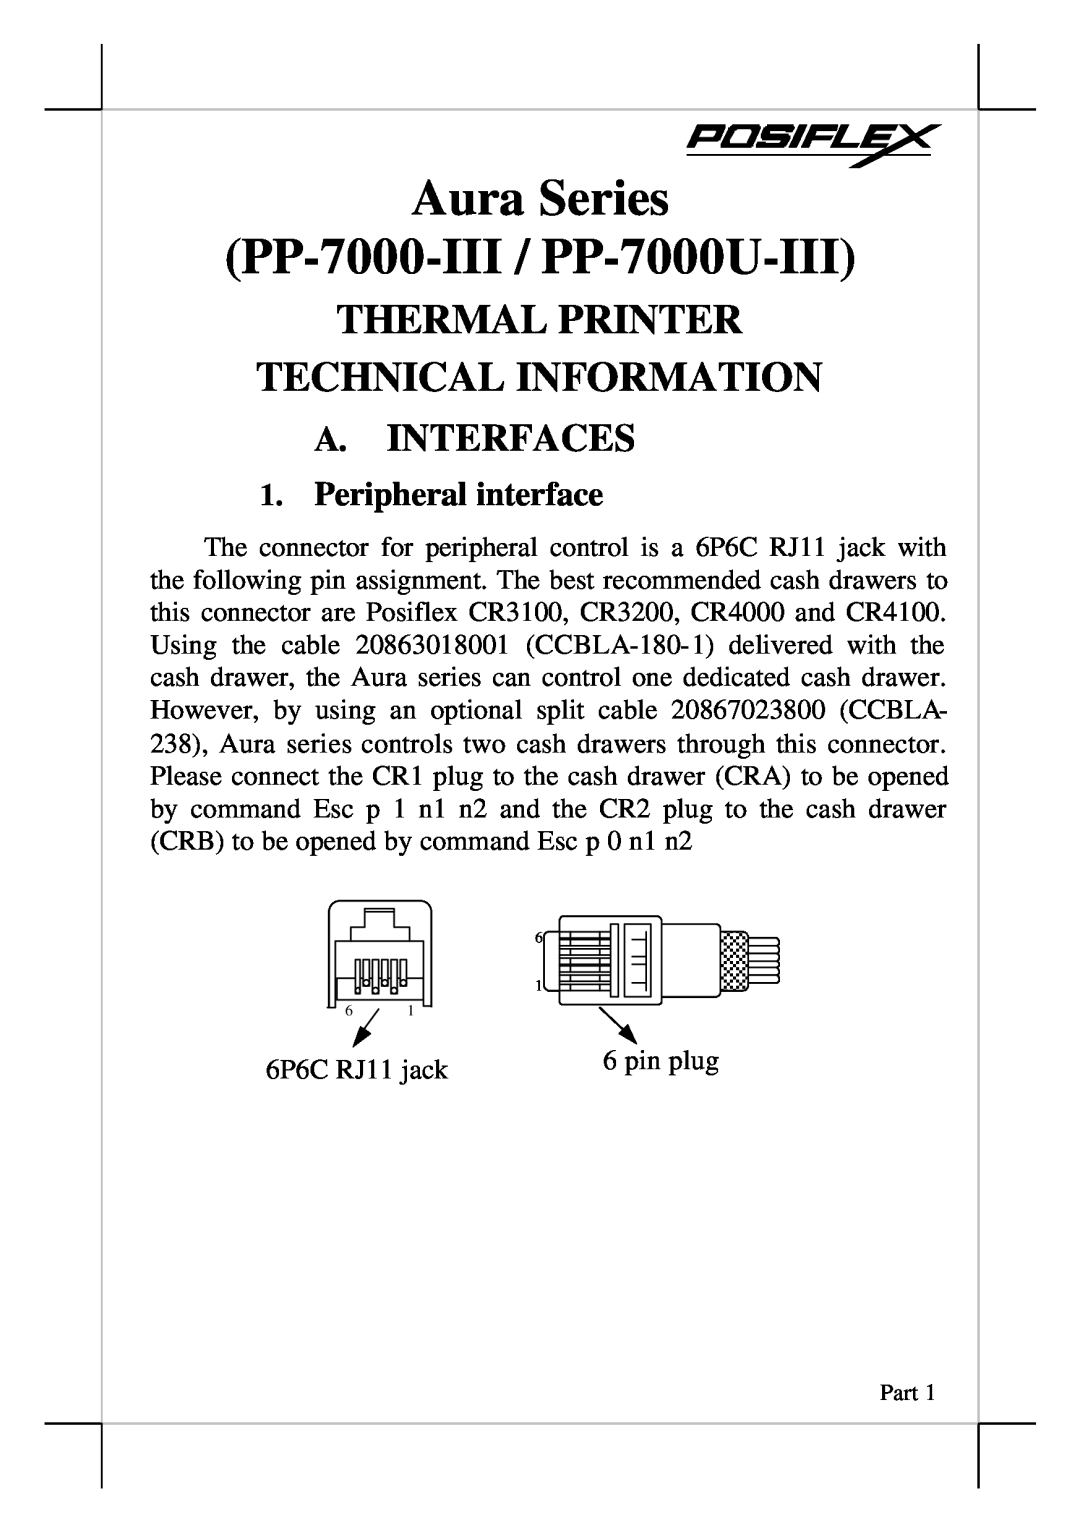 POSIFLEX Business Machines pp-7000-III manual A. Interfaces, Aura Series PP-7000-III / PP-7000U-III, Peripheral interface 